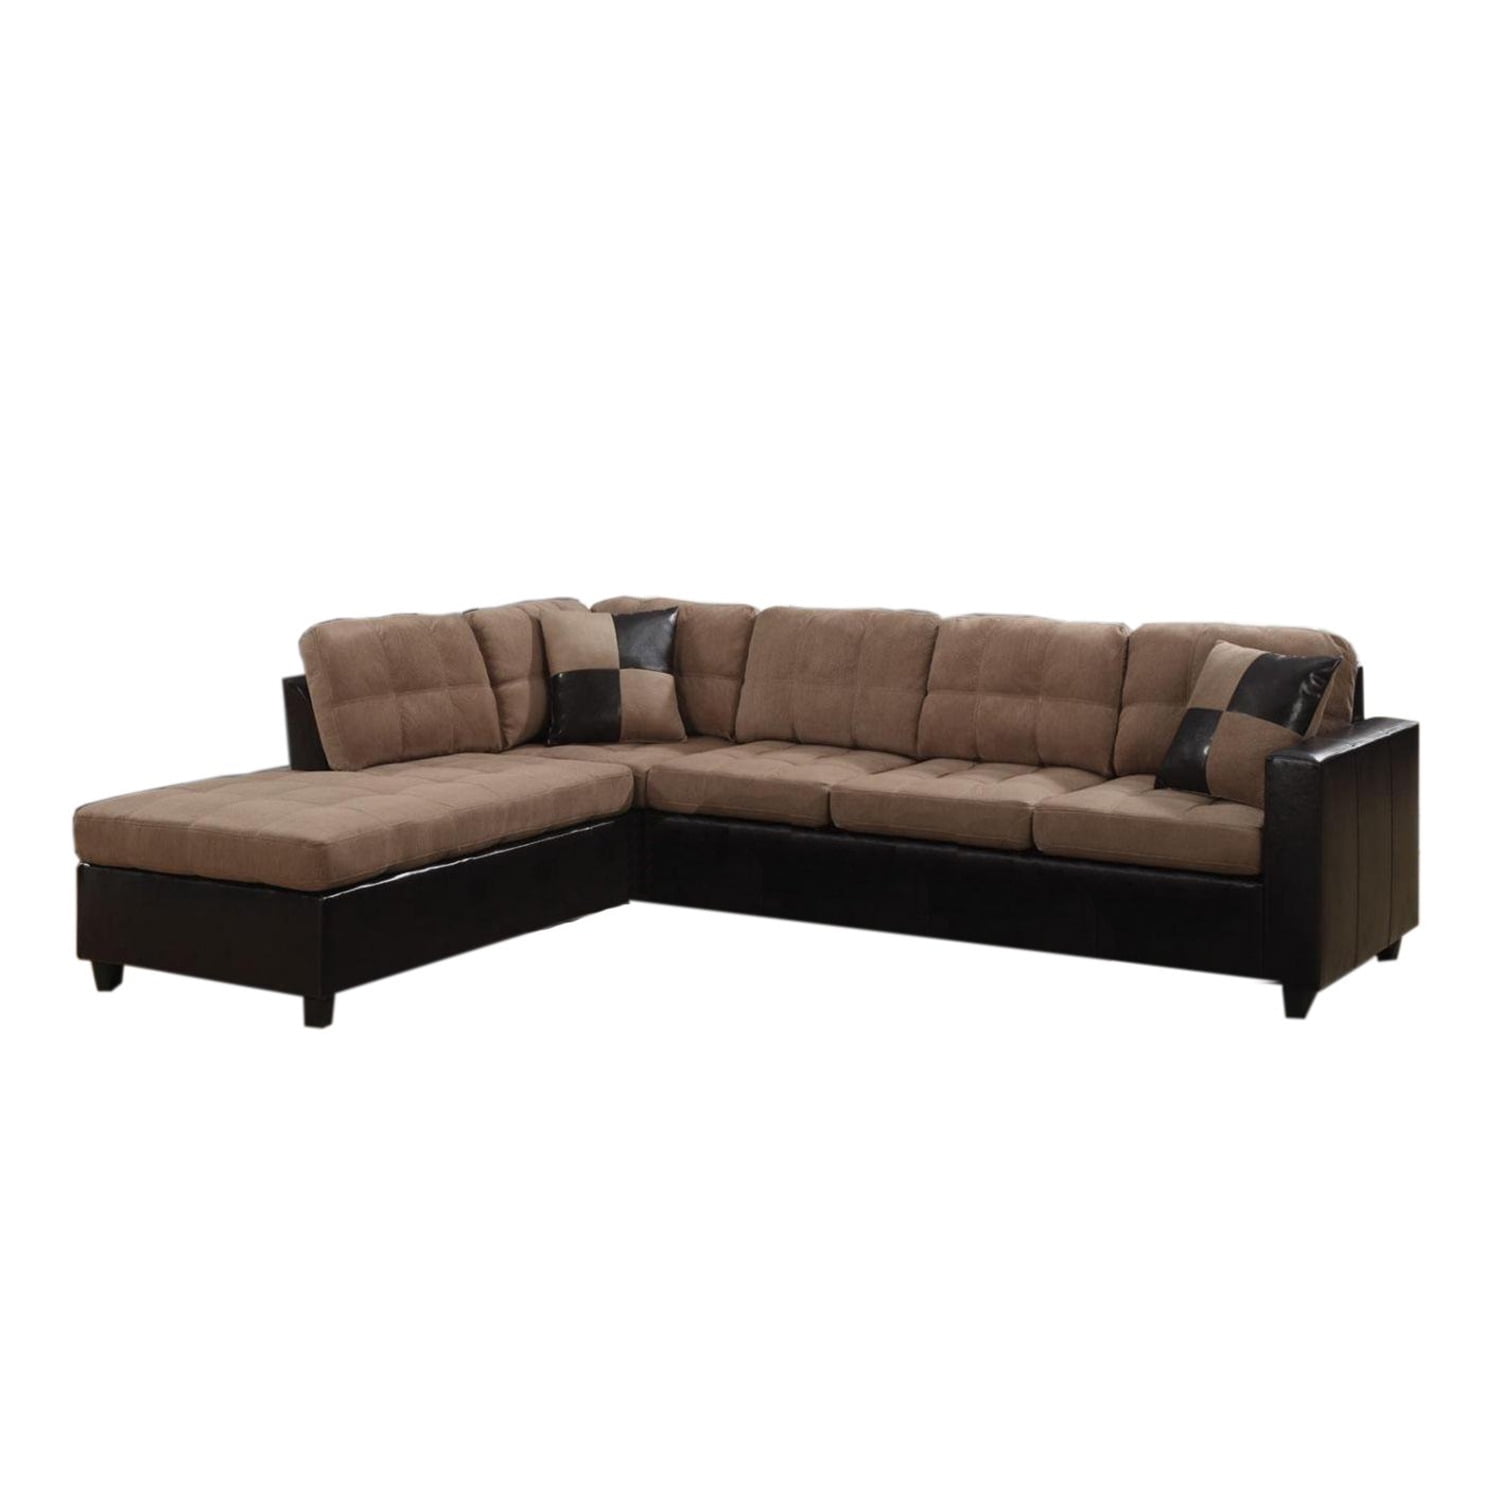 Black Red Bonded Leather Sectional Sofa, Vig 4087 Black White Modern Leather Sectional Sofa With Recliners